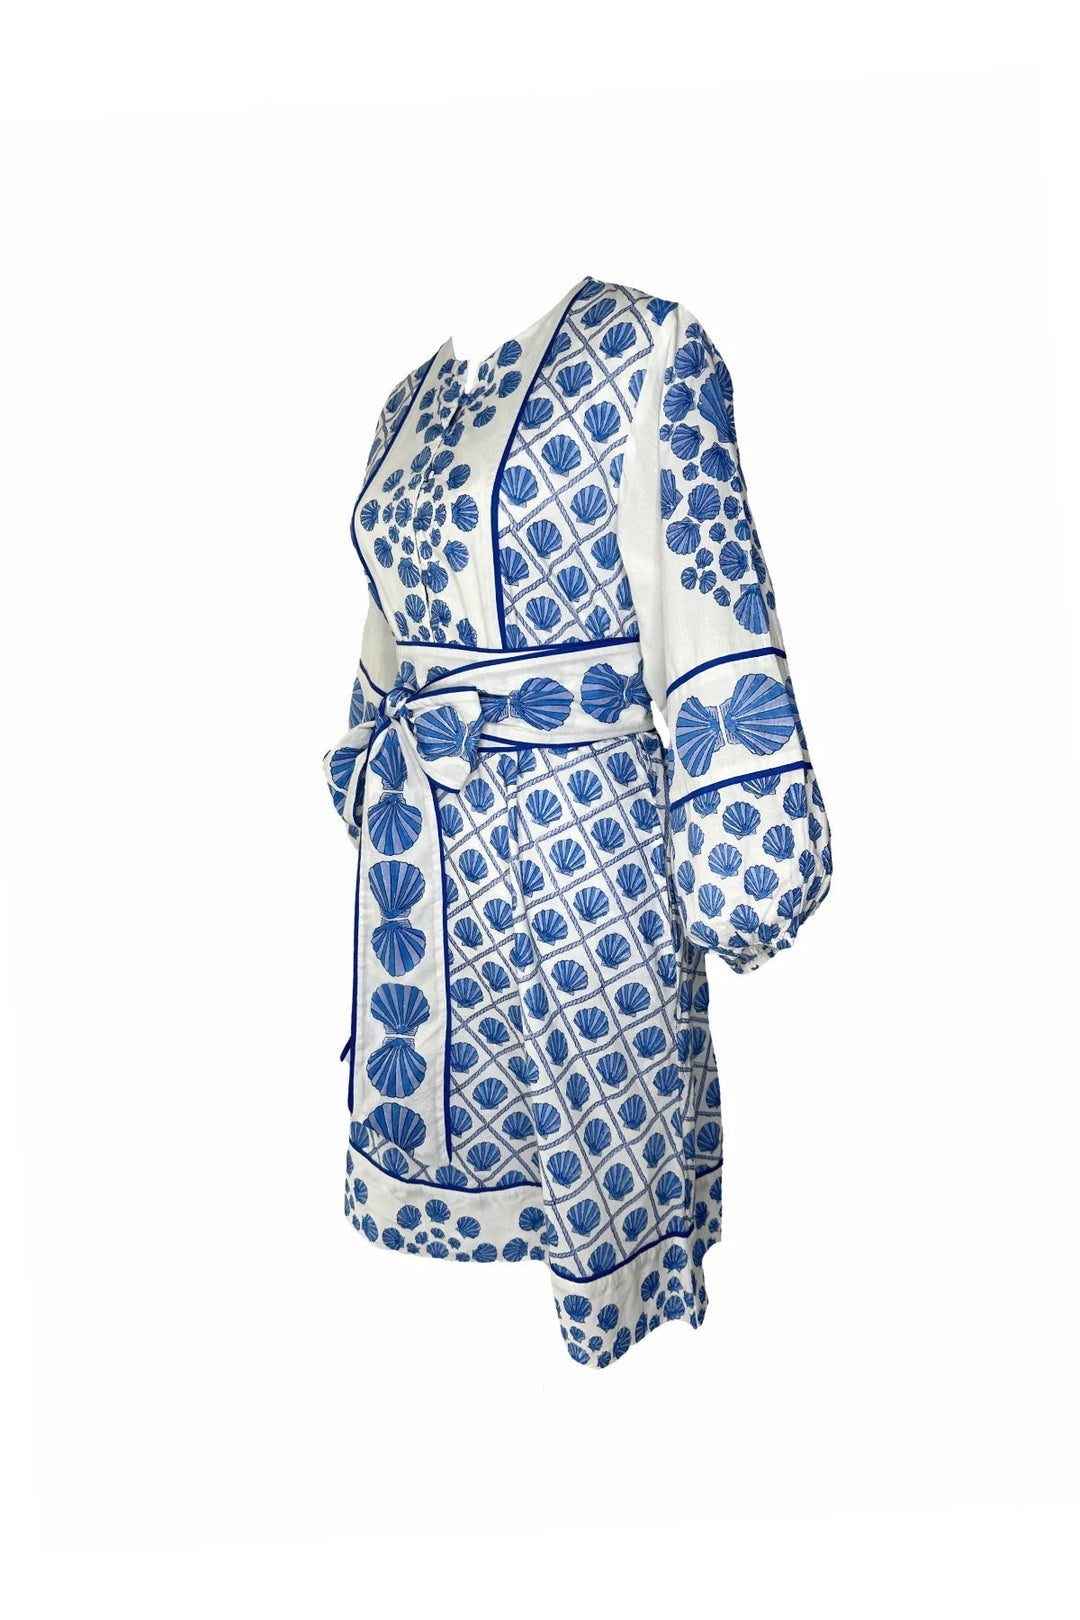 Sue Sartor Dress Jewel Neck Flounce Mini in Royal Blue / Periwinkle Scallop Shell